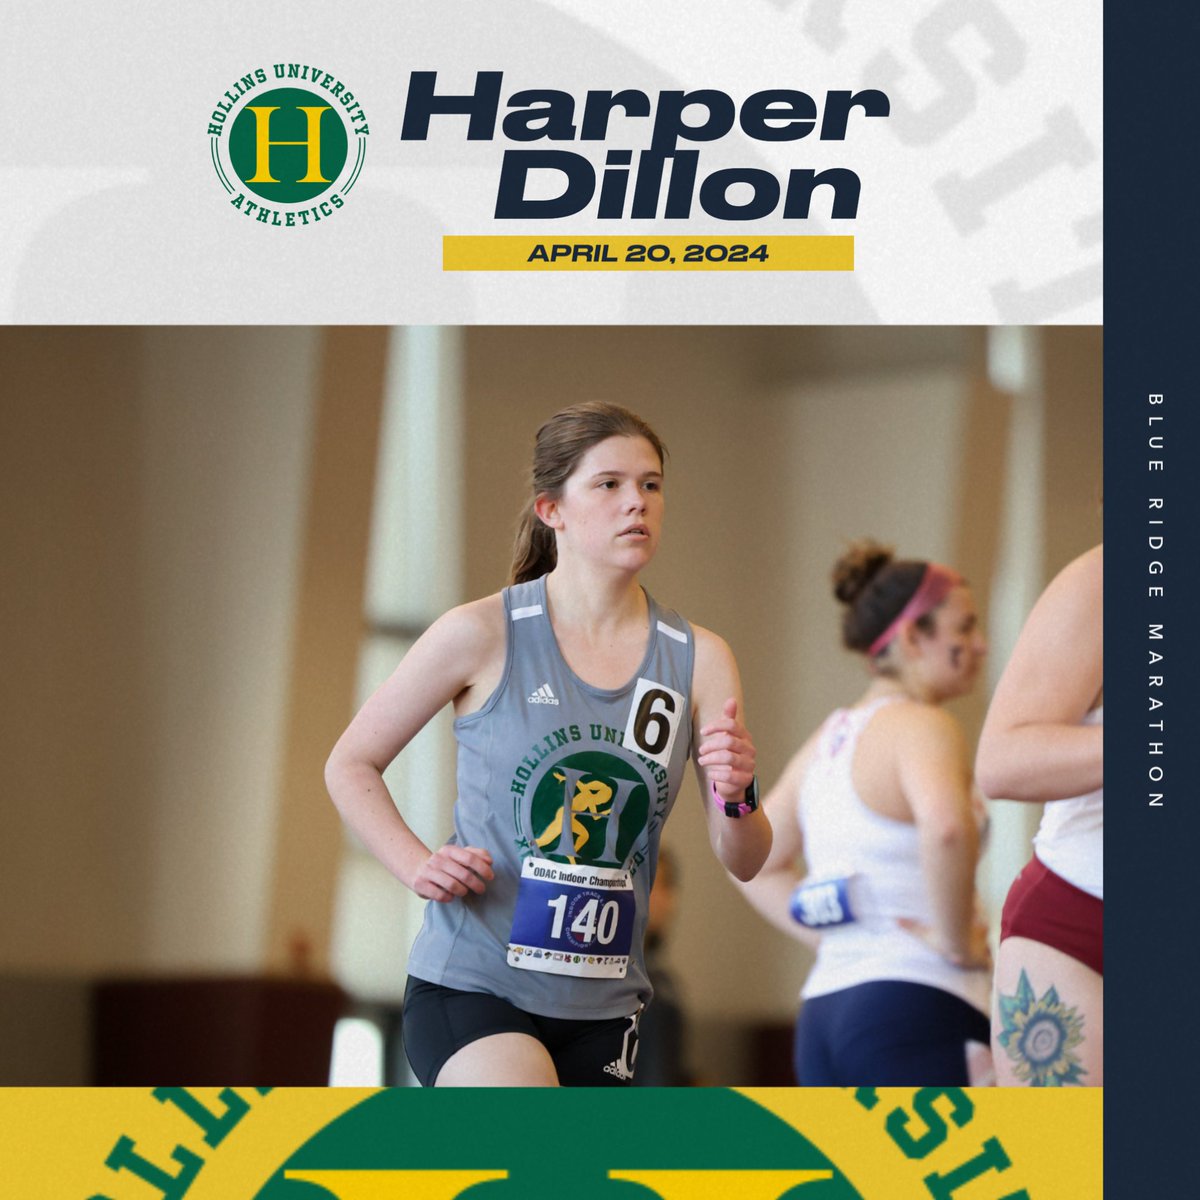 Good Luck to @huxctf Harper Dillon this Saturday at the Foot Levelers Blue Ridge Marathon (blueridgemarathon.com) this Saturday. wsls.com/news/local/202…